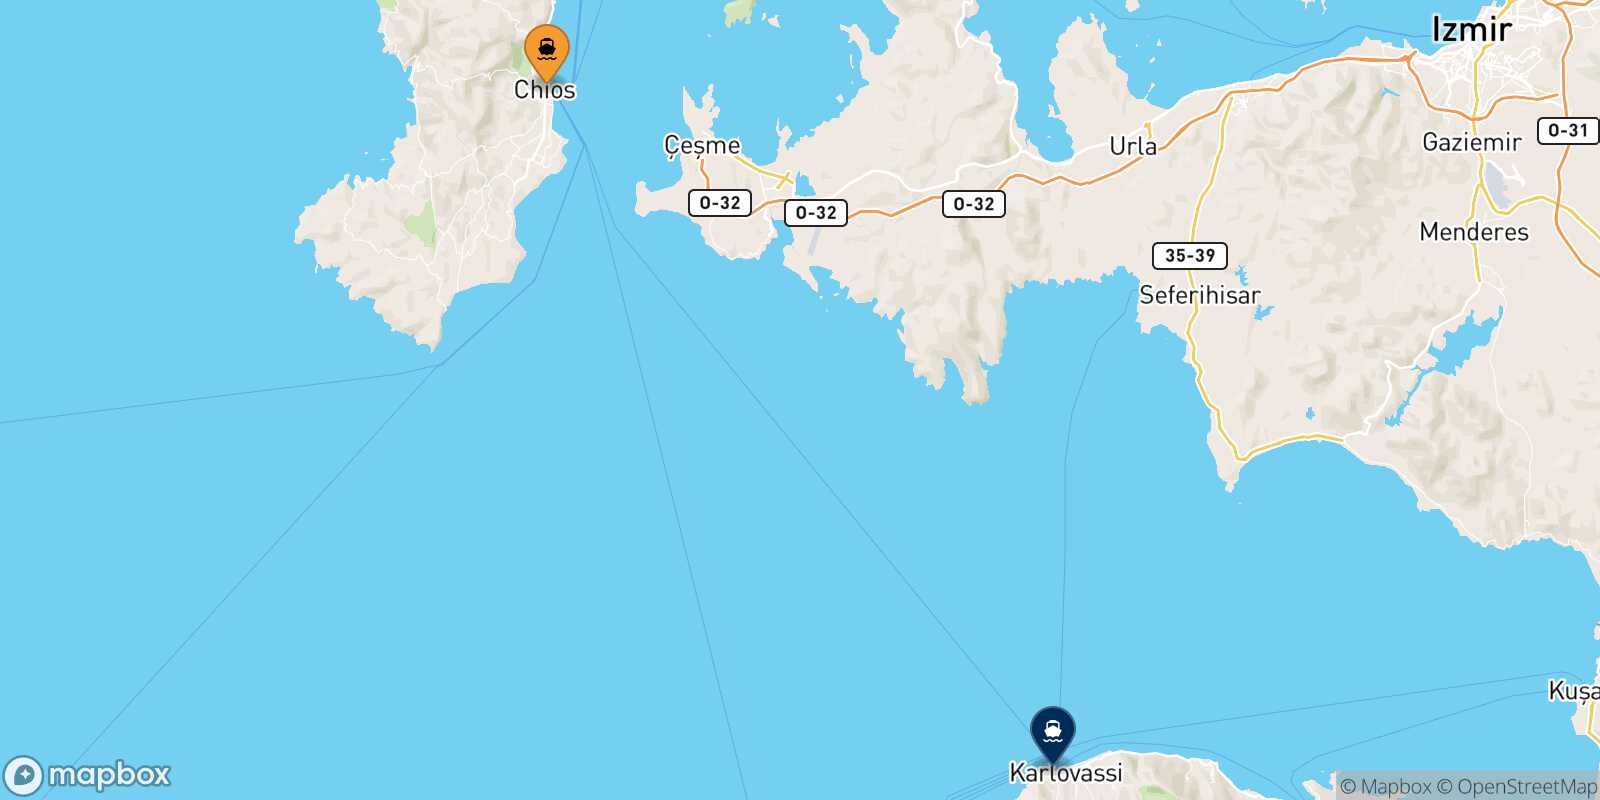 Chios Karlovassi (Samos) route map